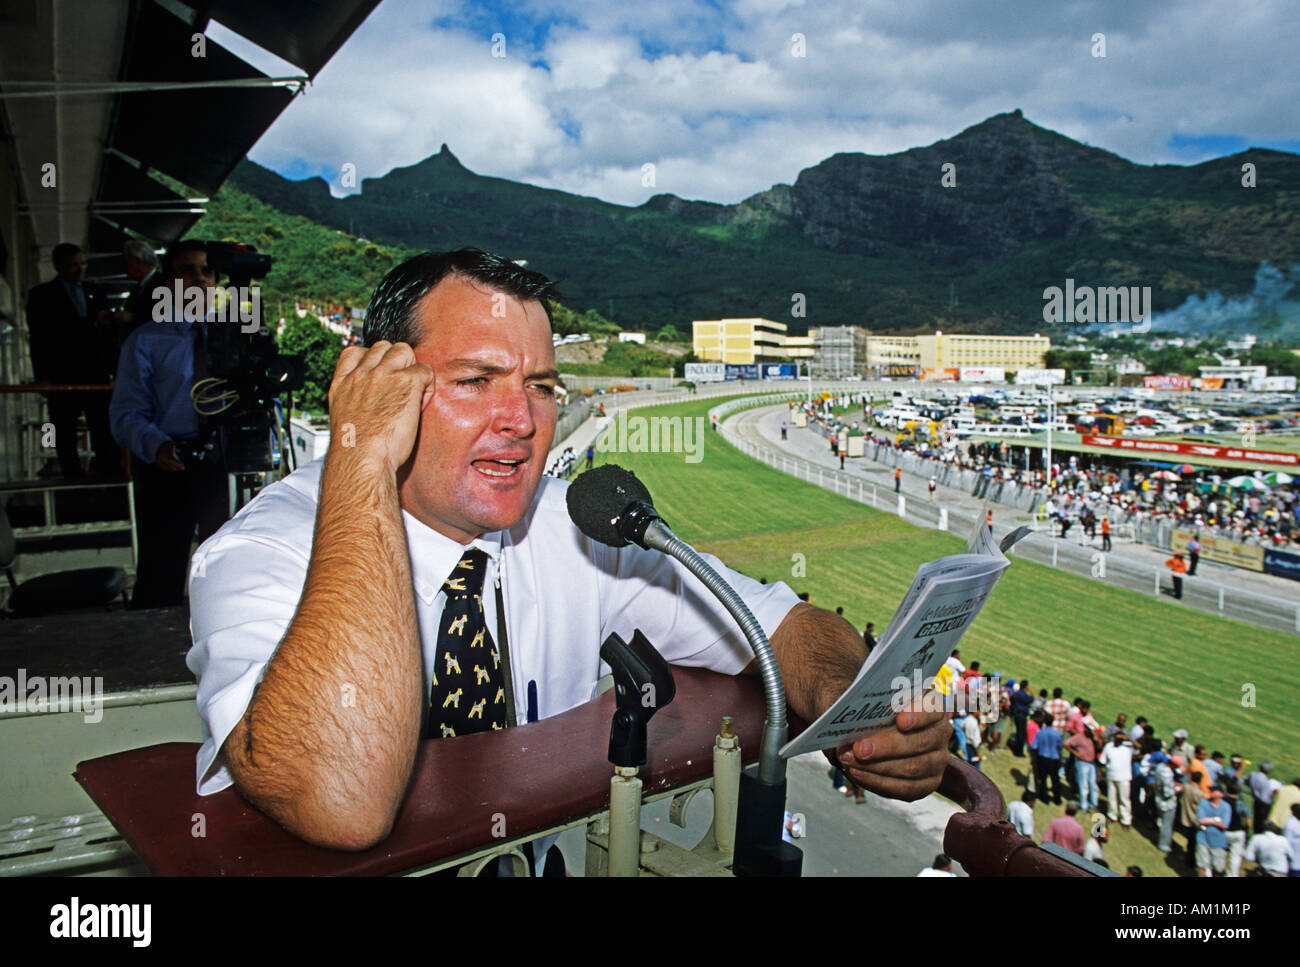 Announcer at the racecourse of Mauritius Turf Club, Mauritius island, Africa Stock Photo